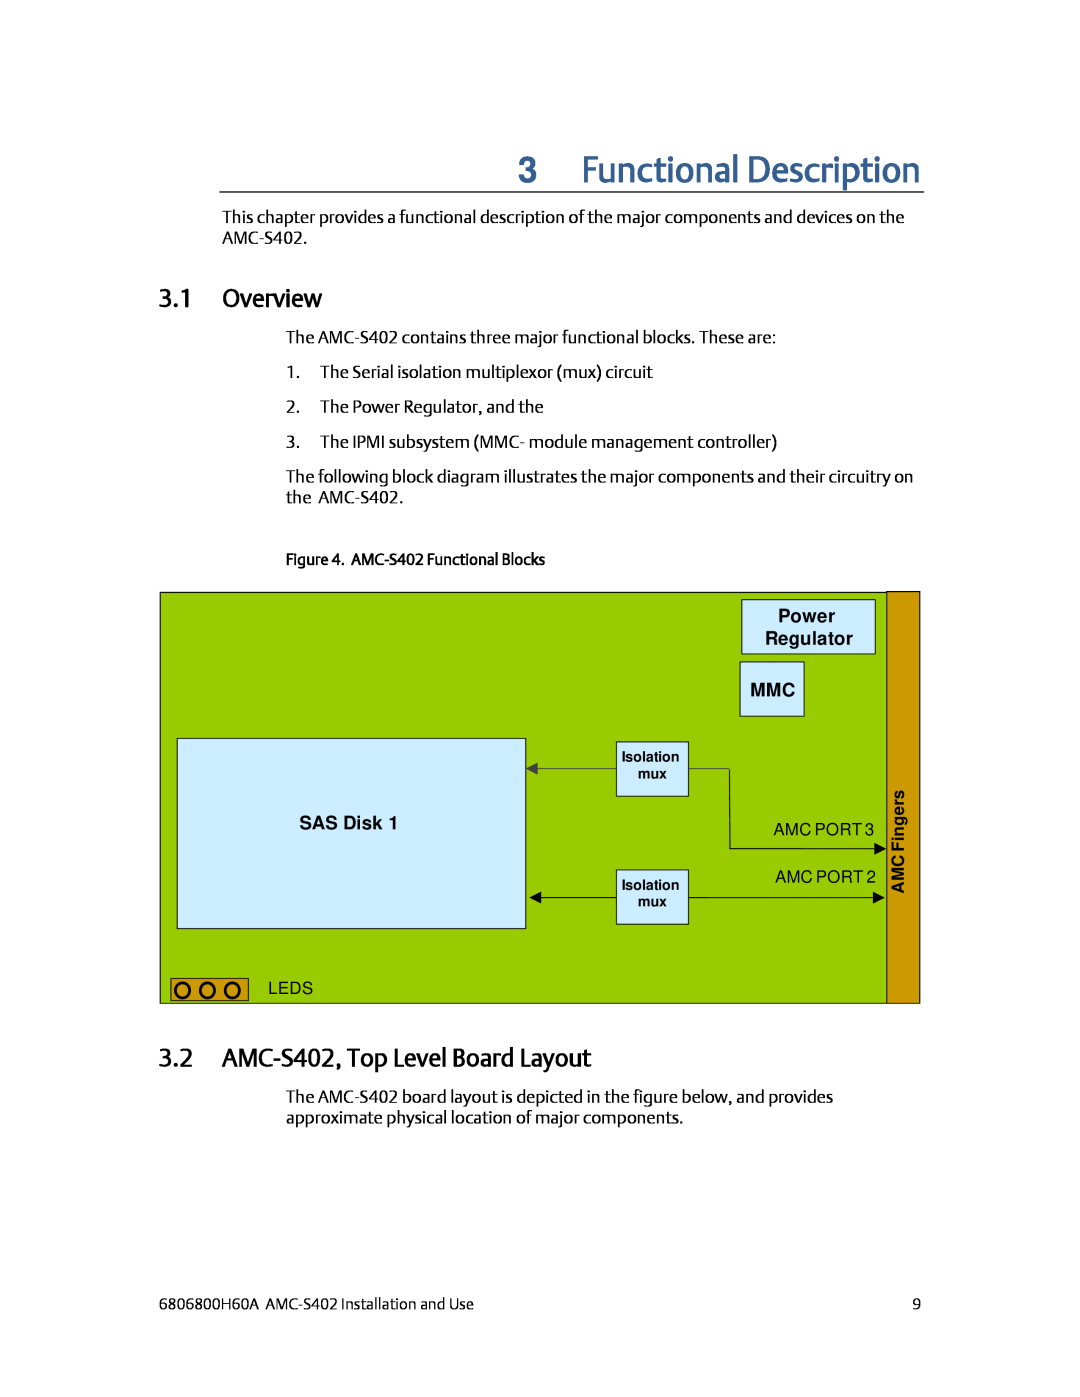 Emerson manual Functional Description, Overview, AMC-S402, Top Level Board Layout, SAS Disk, Power Regulator MMC 